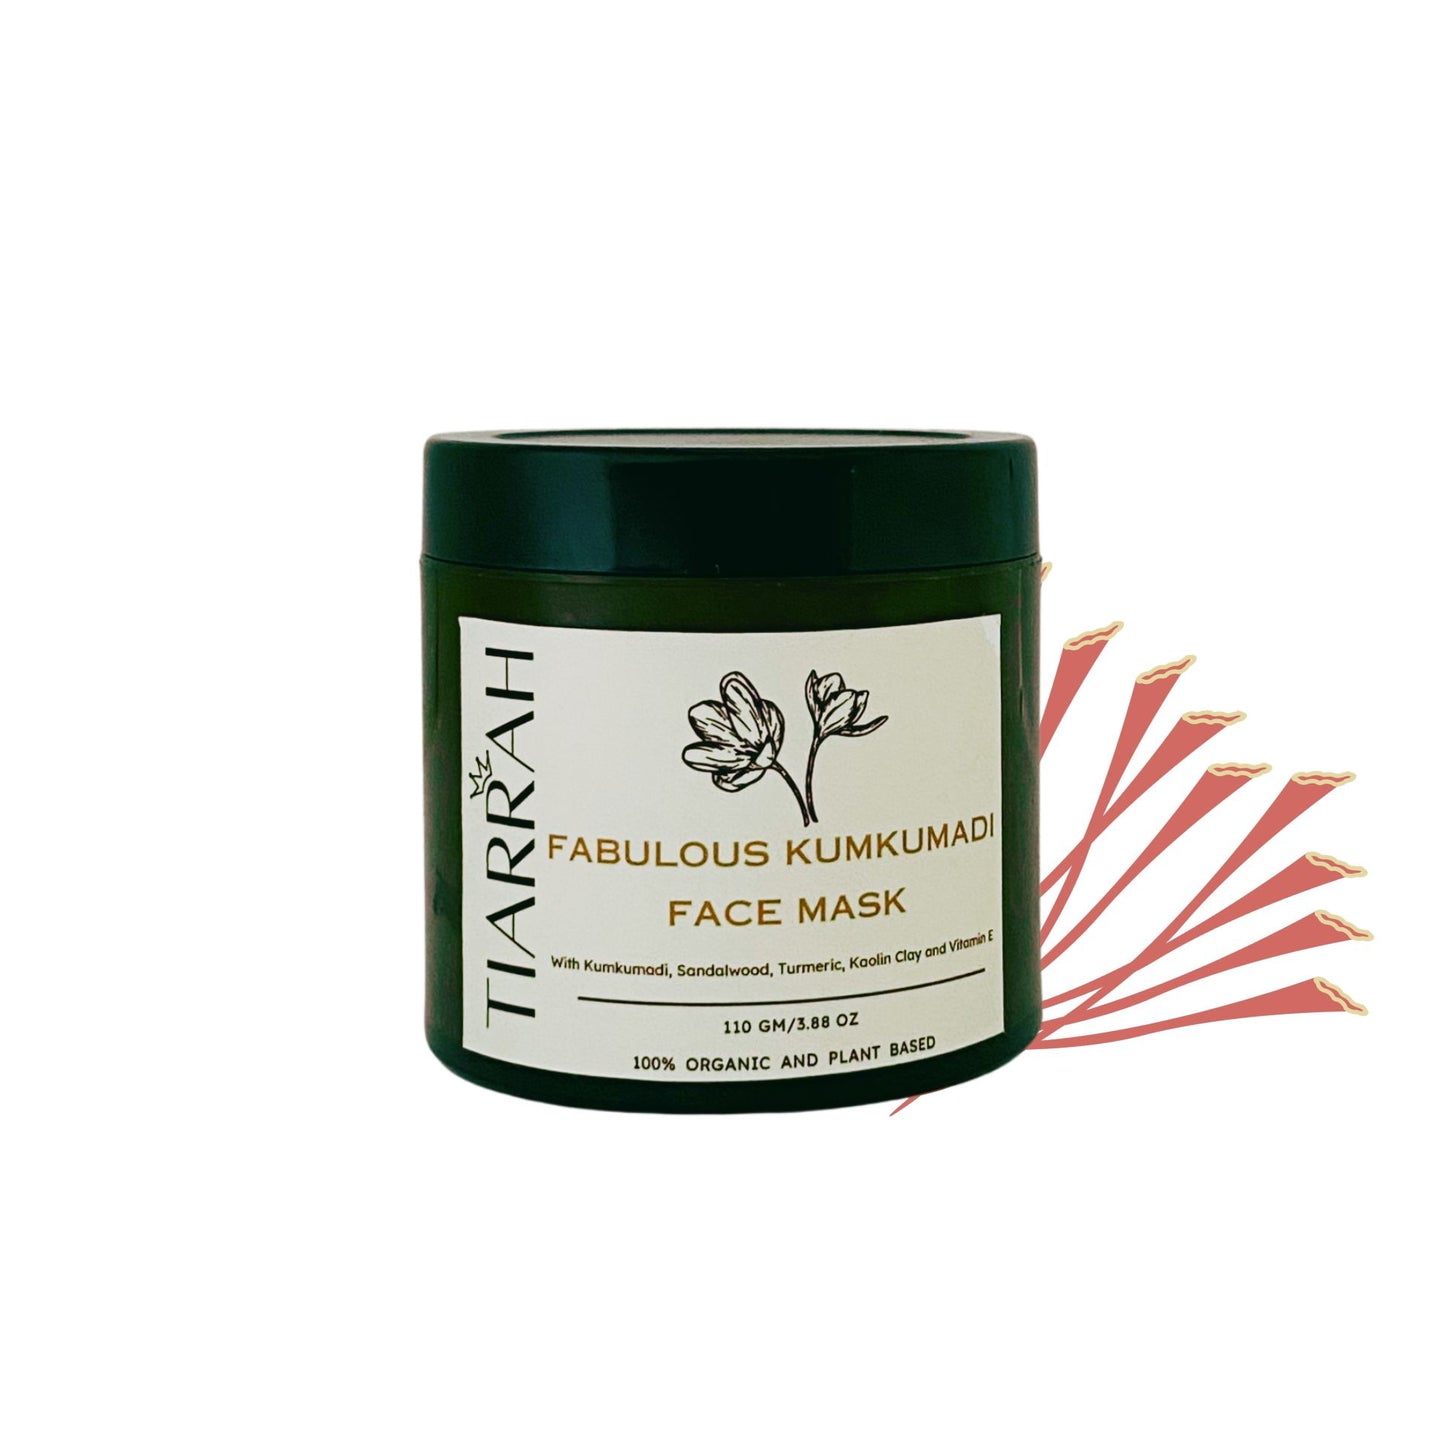 Tiarrah Kumkumadi Face Mask: Natural, Organic, Non-Toxic - The Luxury Bath and Body Care Shop